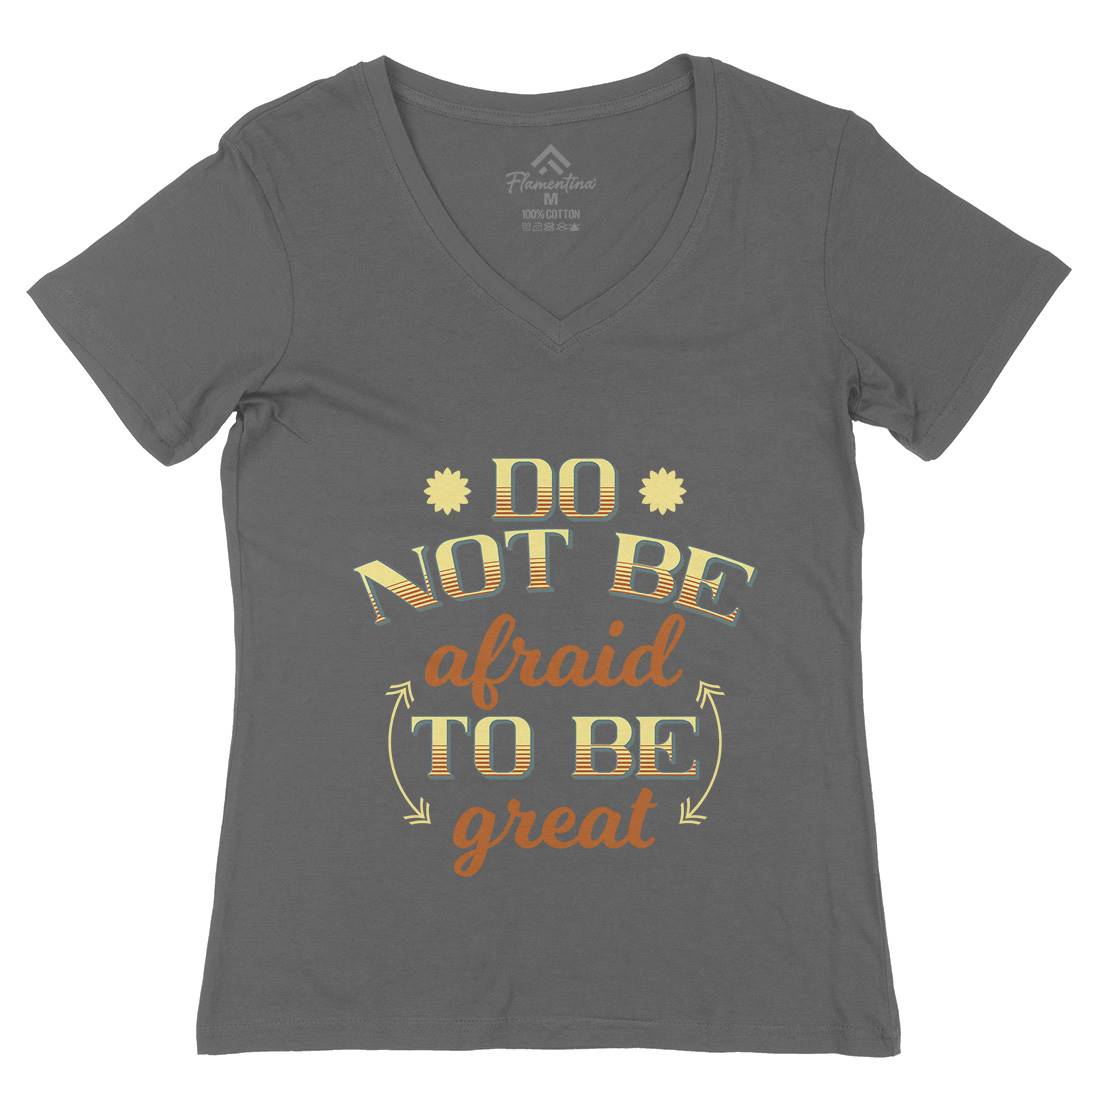 Be Great Womens Organic V-Neck T-Shirt Retro B278